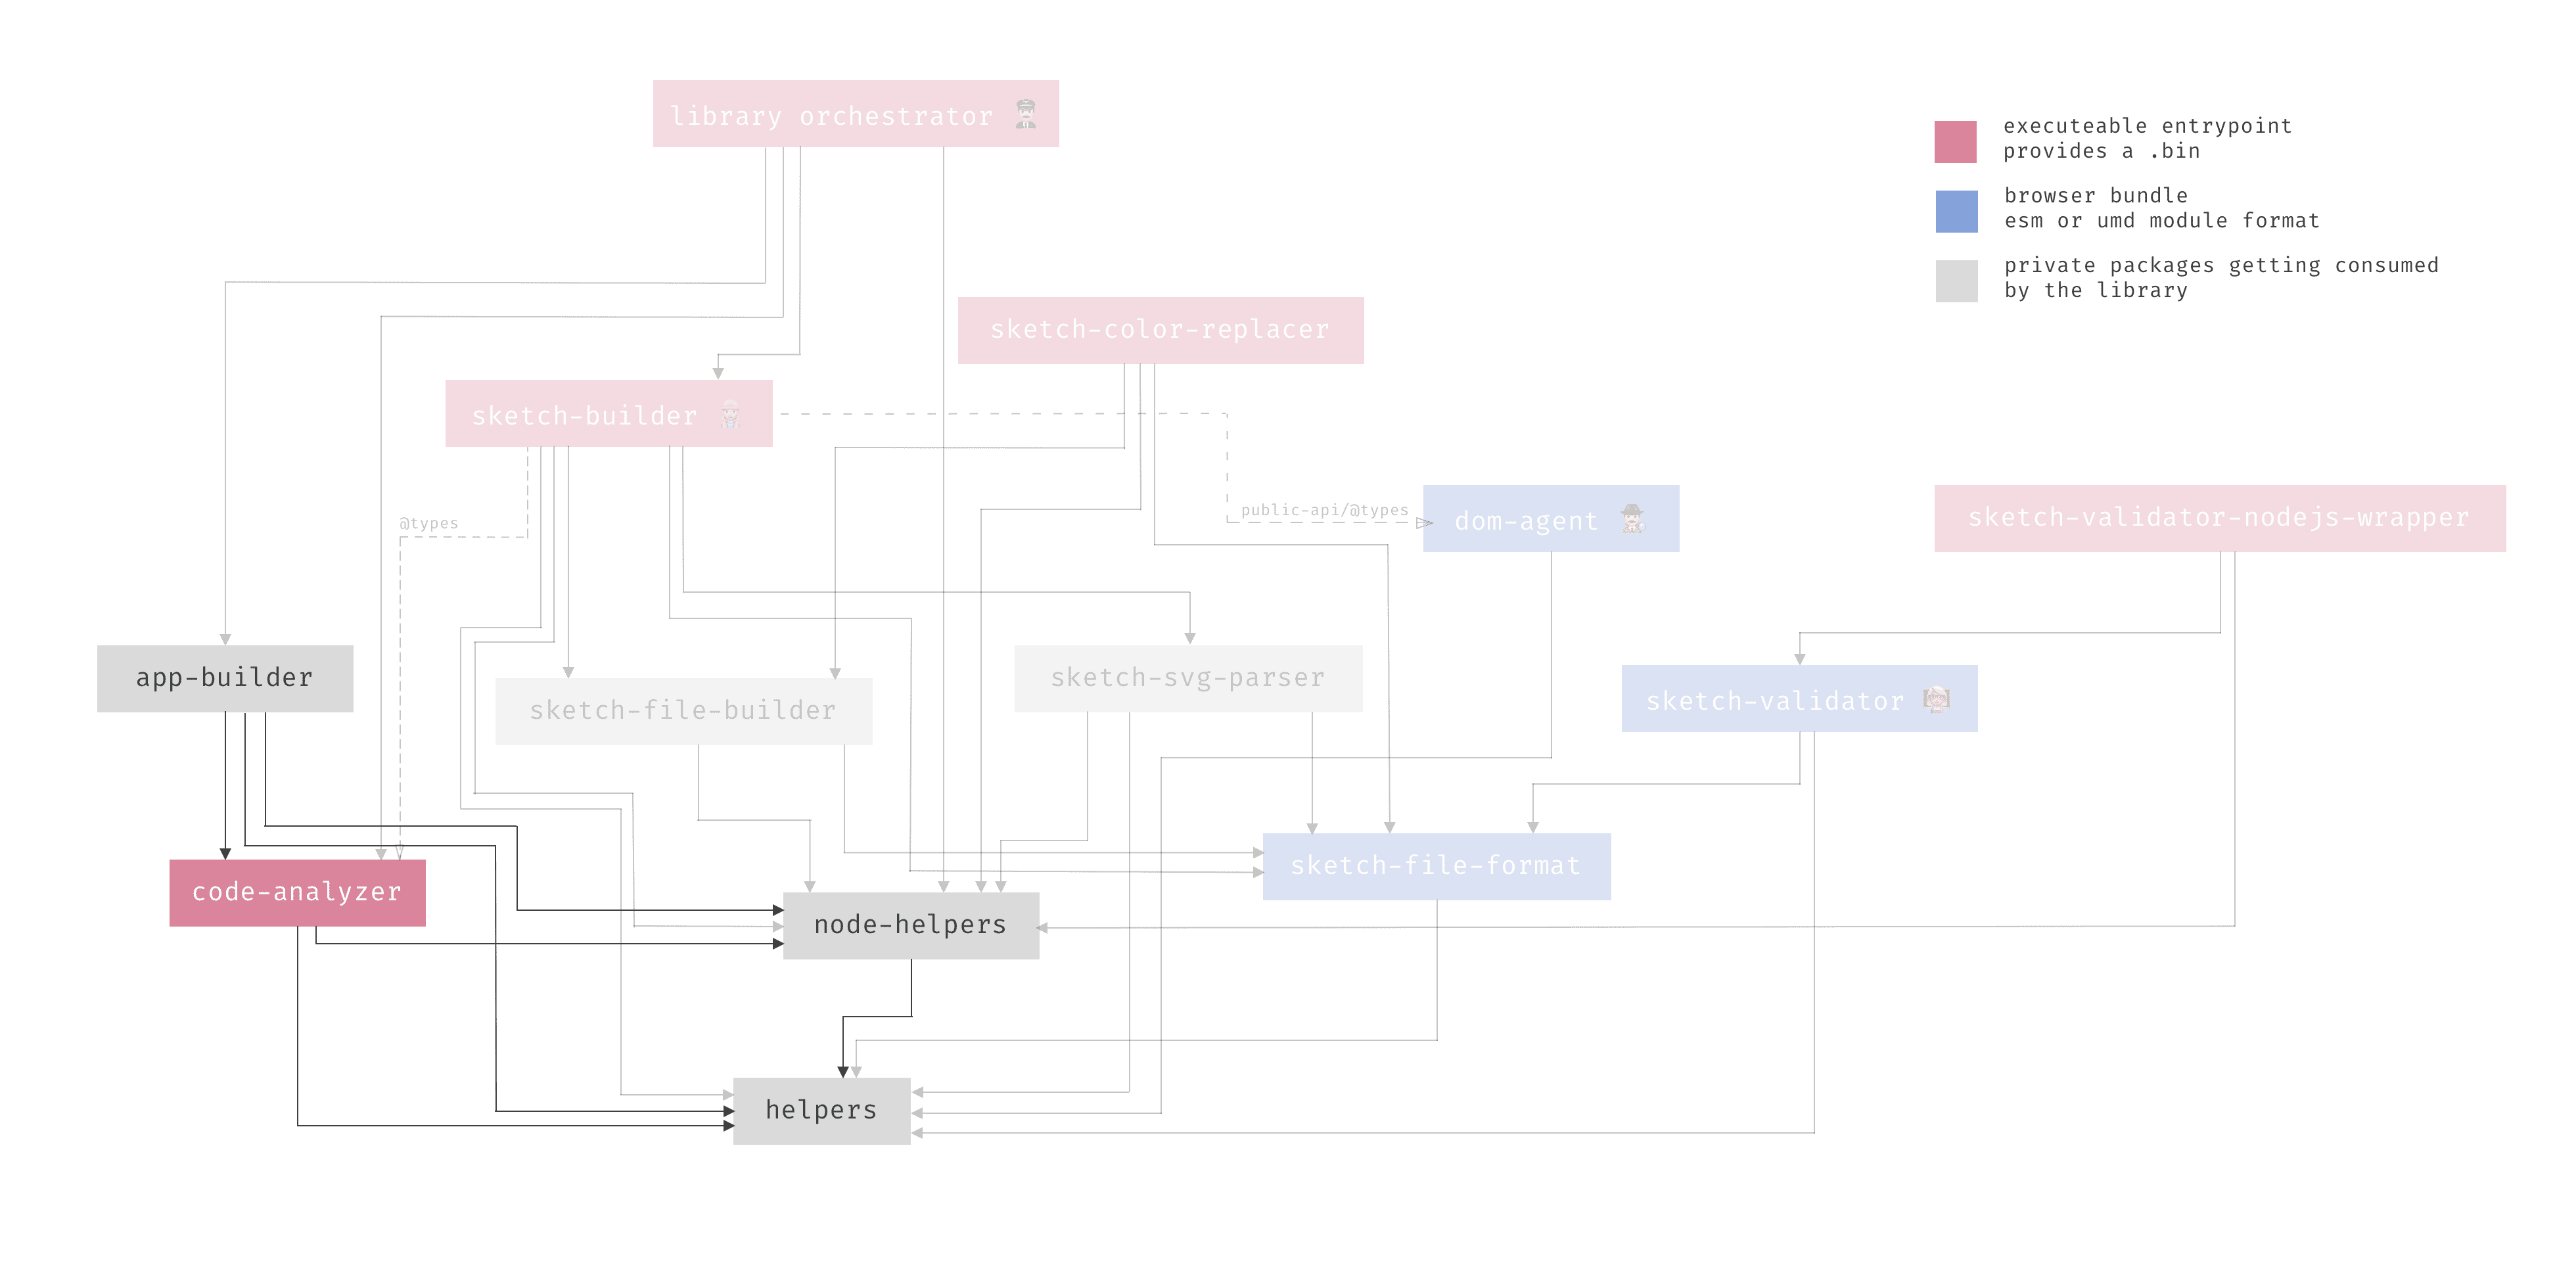 Dependency graph of the Sketchmine app-builder